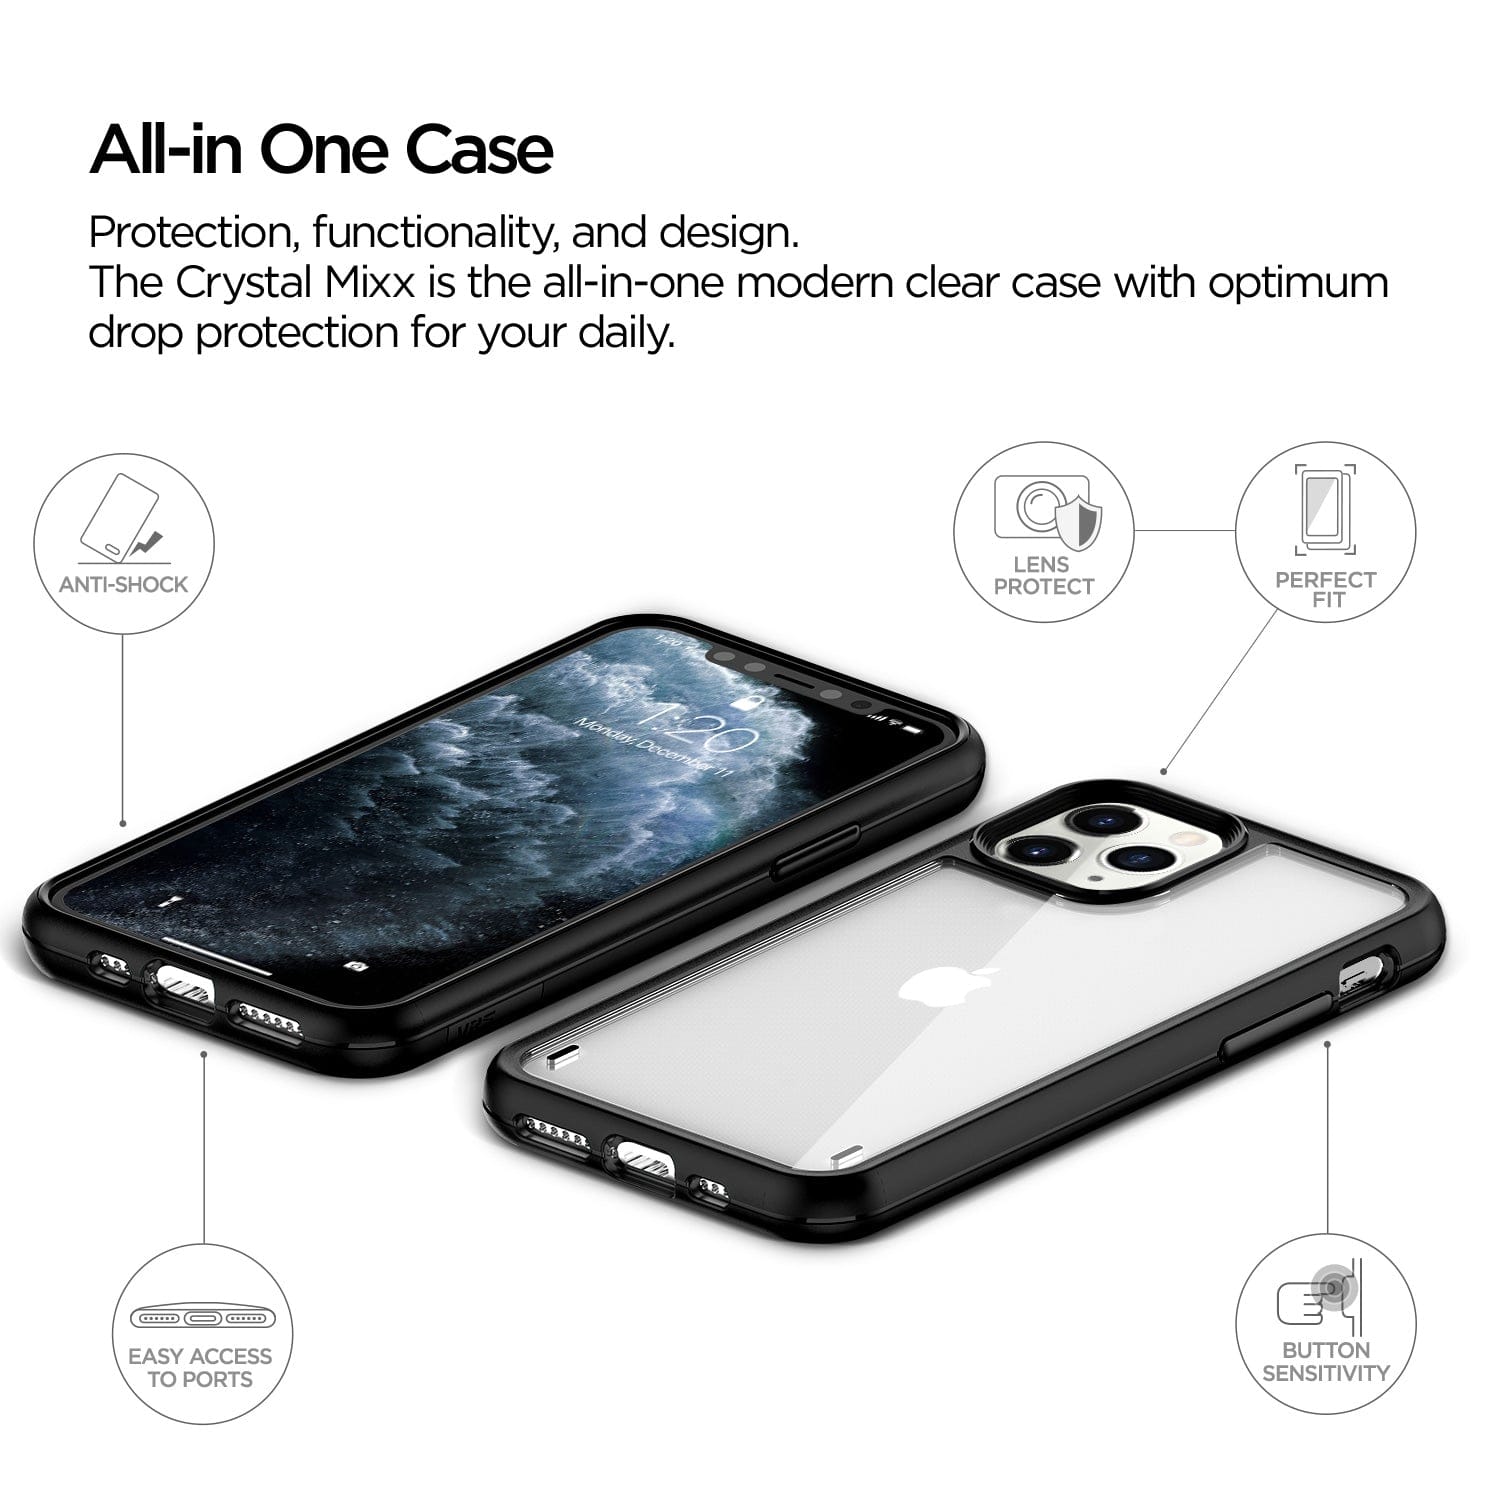 iPhone11 Pro Damda Crystal Mixx Black Case By VRS Design